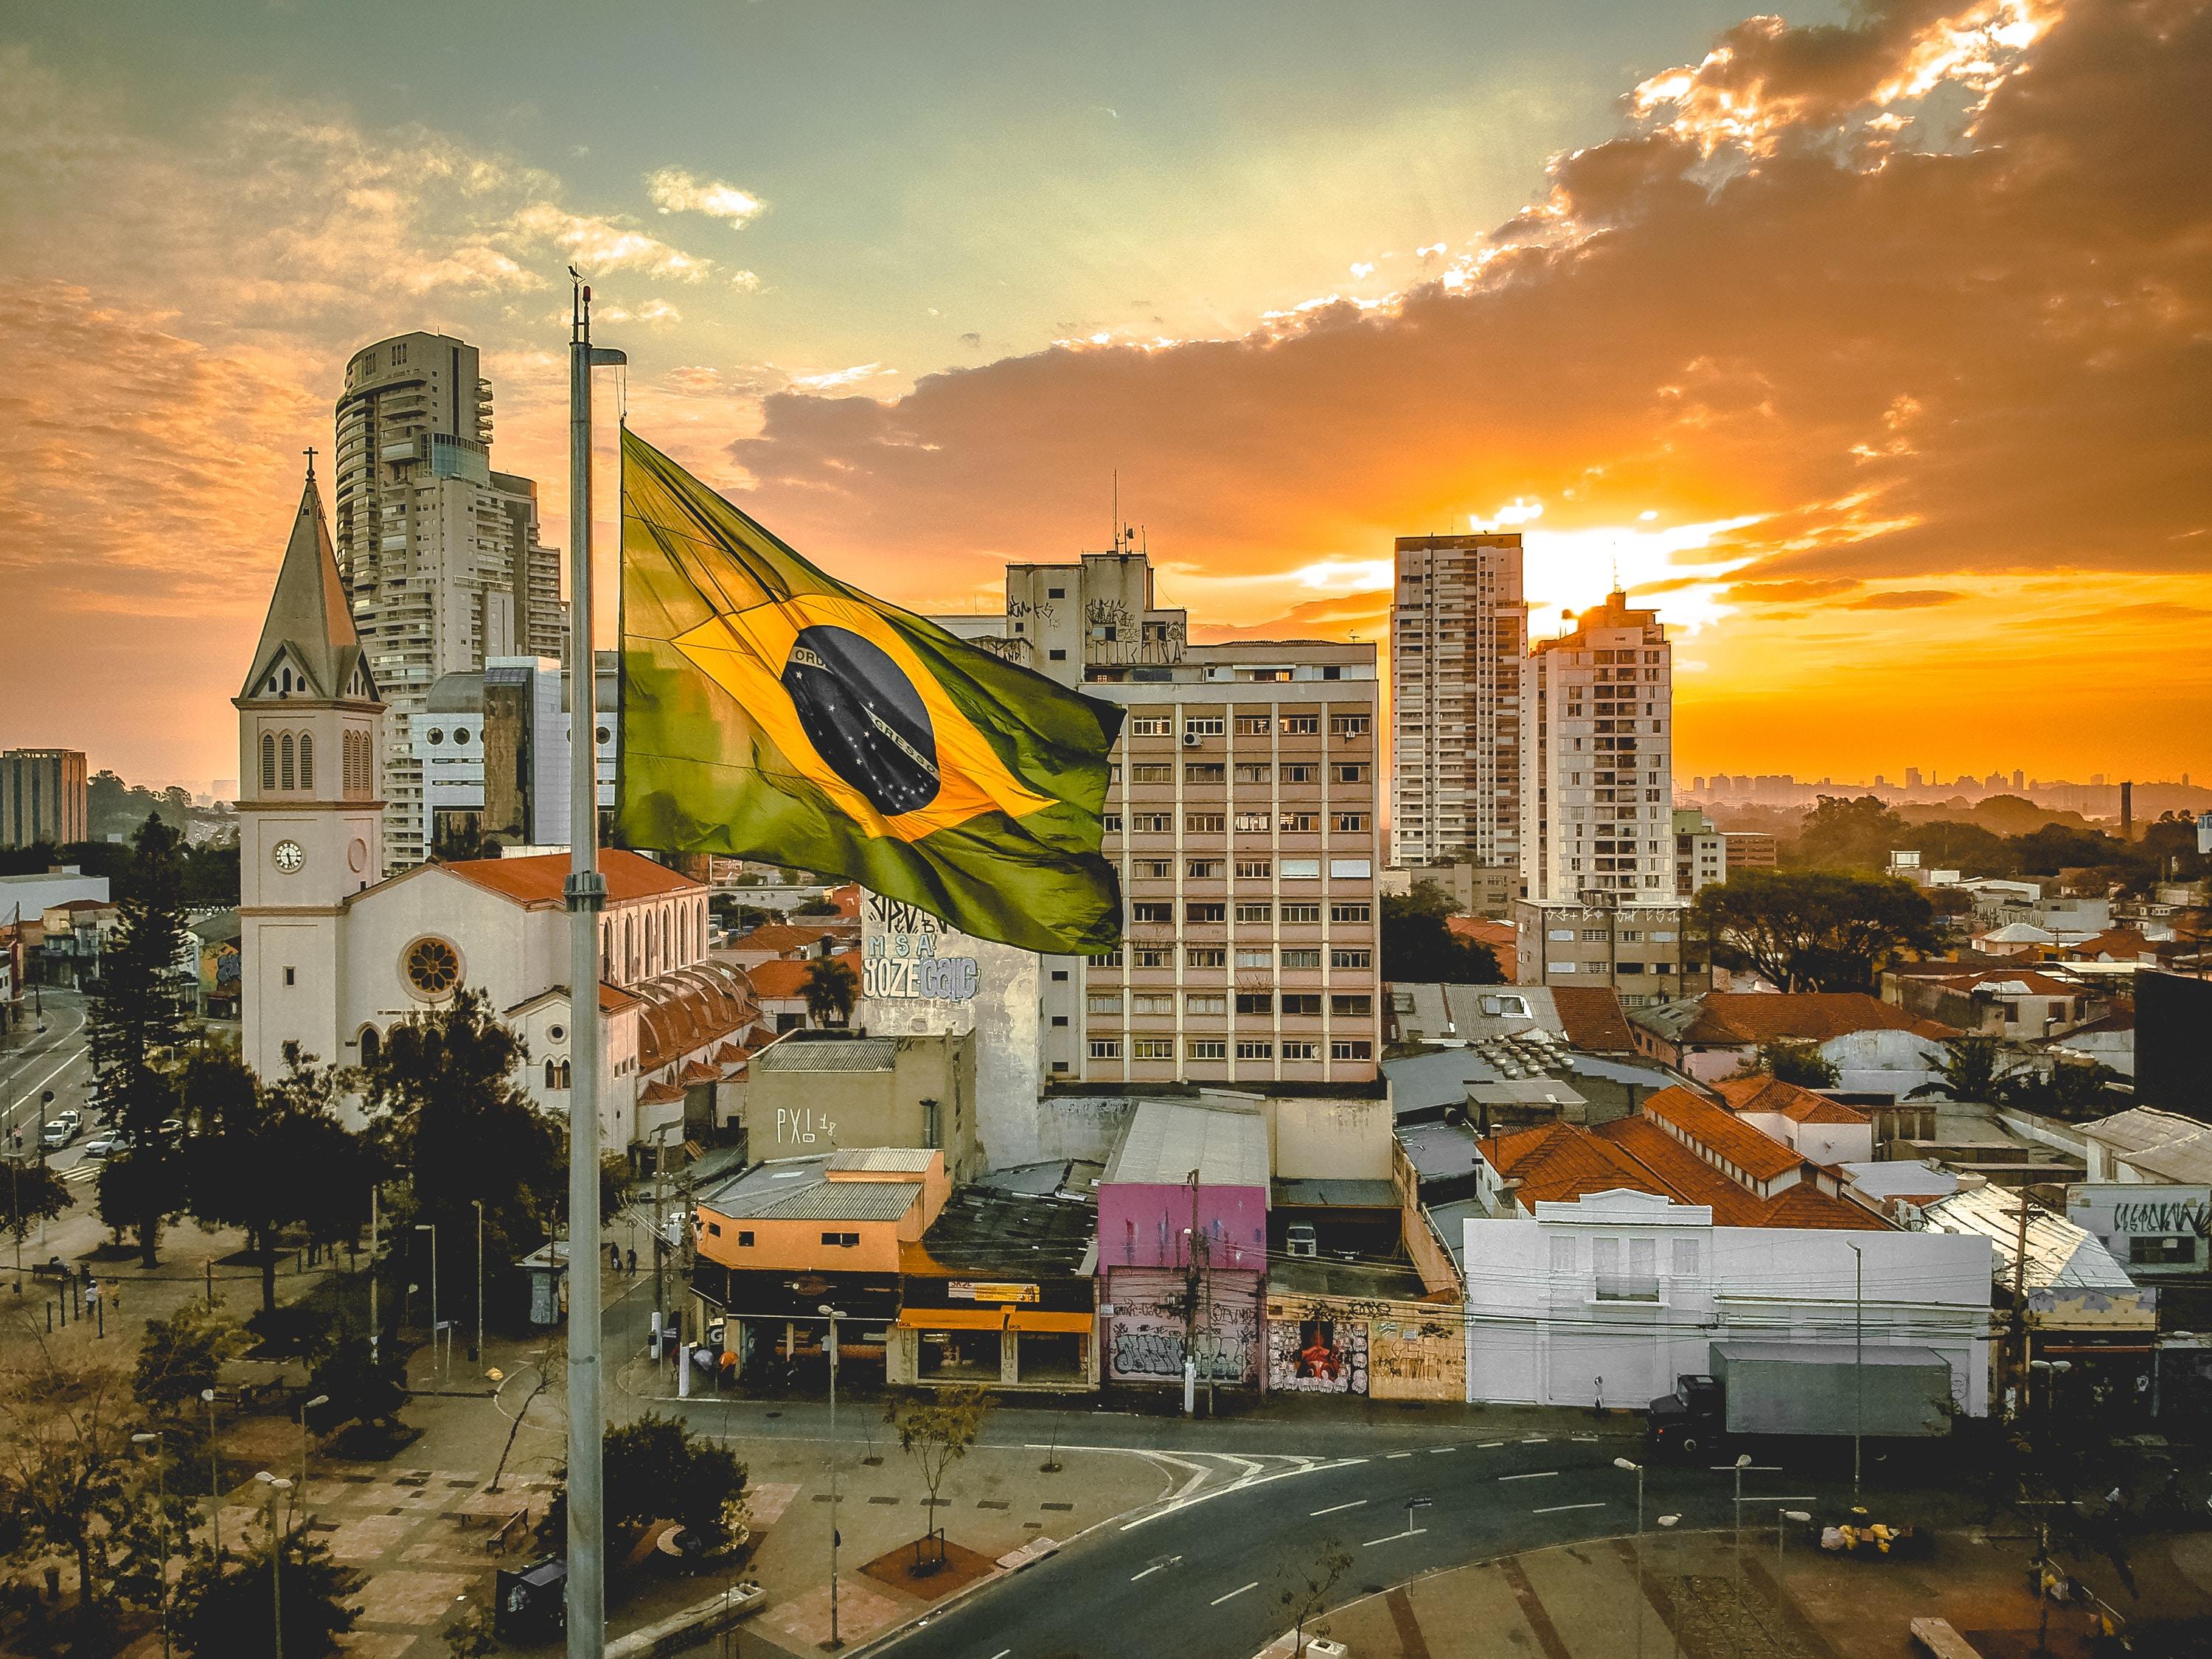 Brasilien. Foto: Sergio Souza on Unsplash